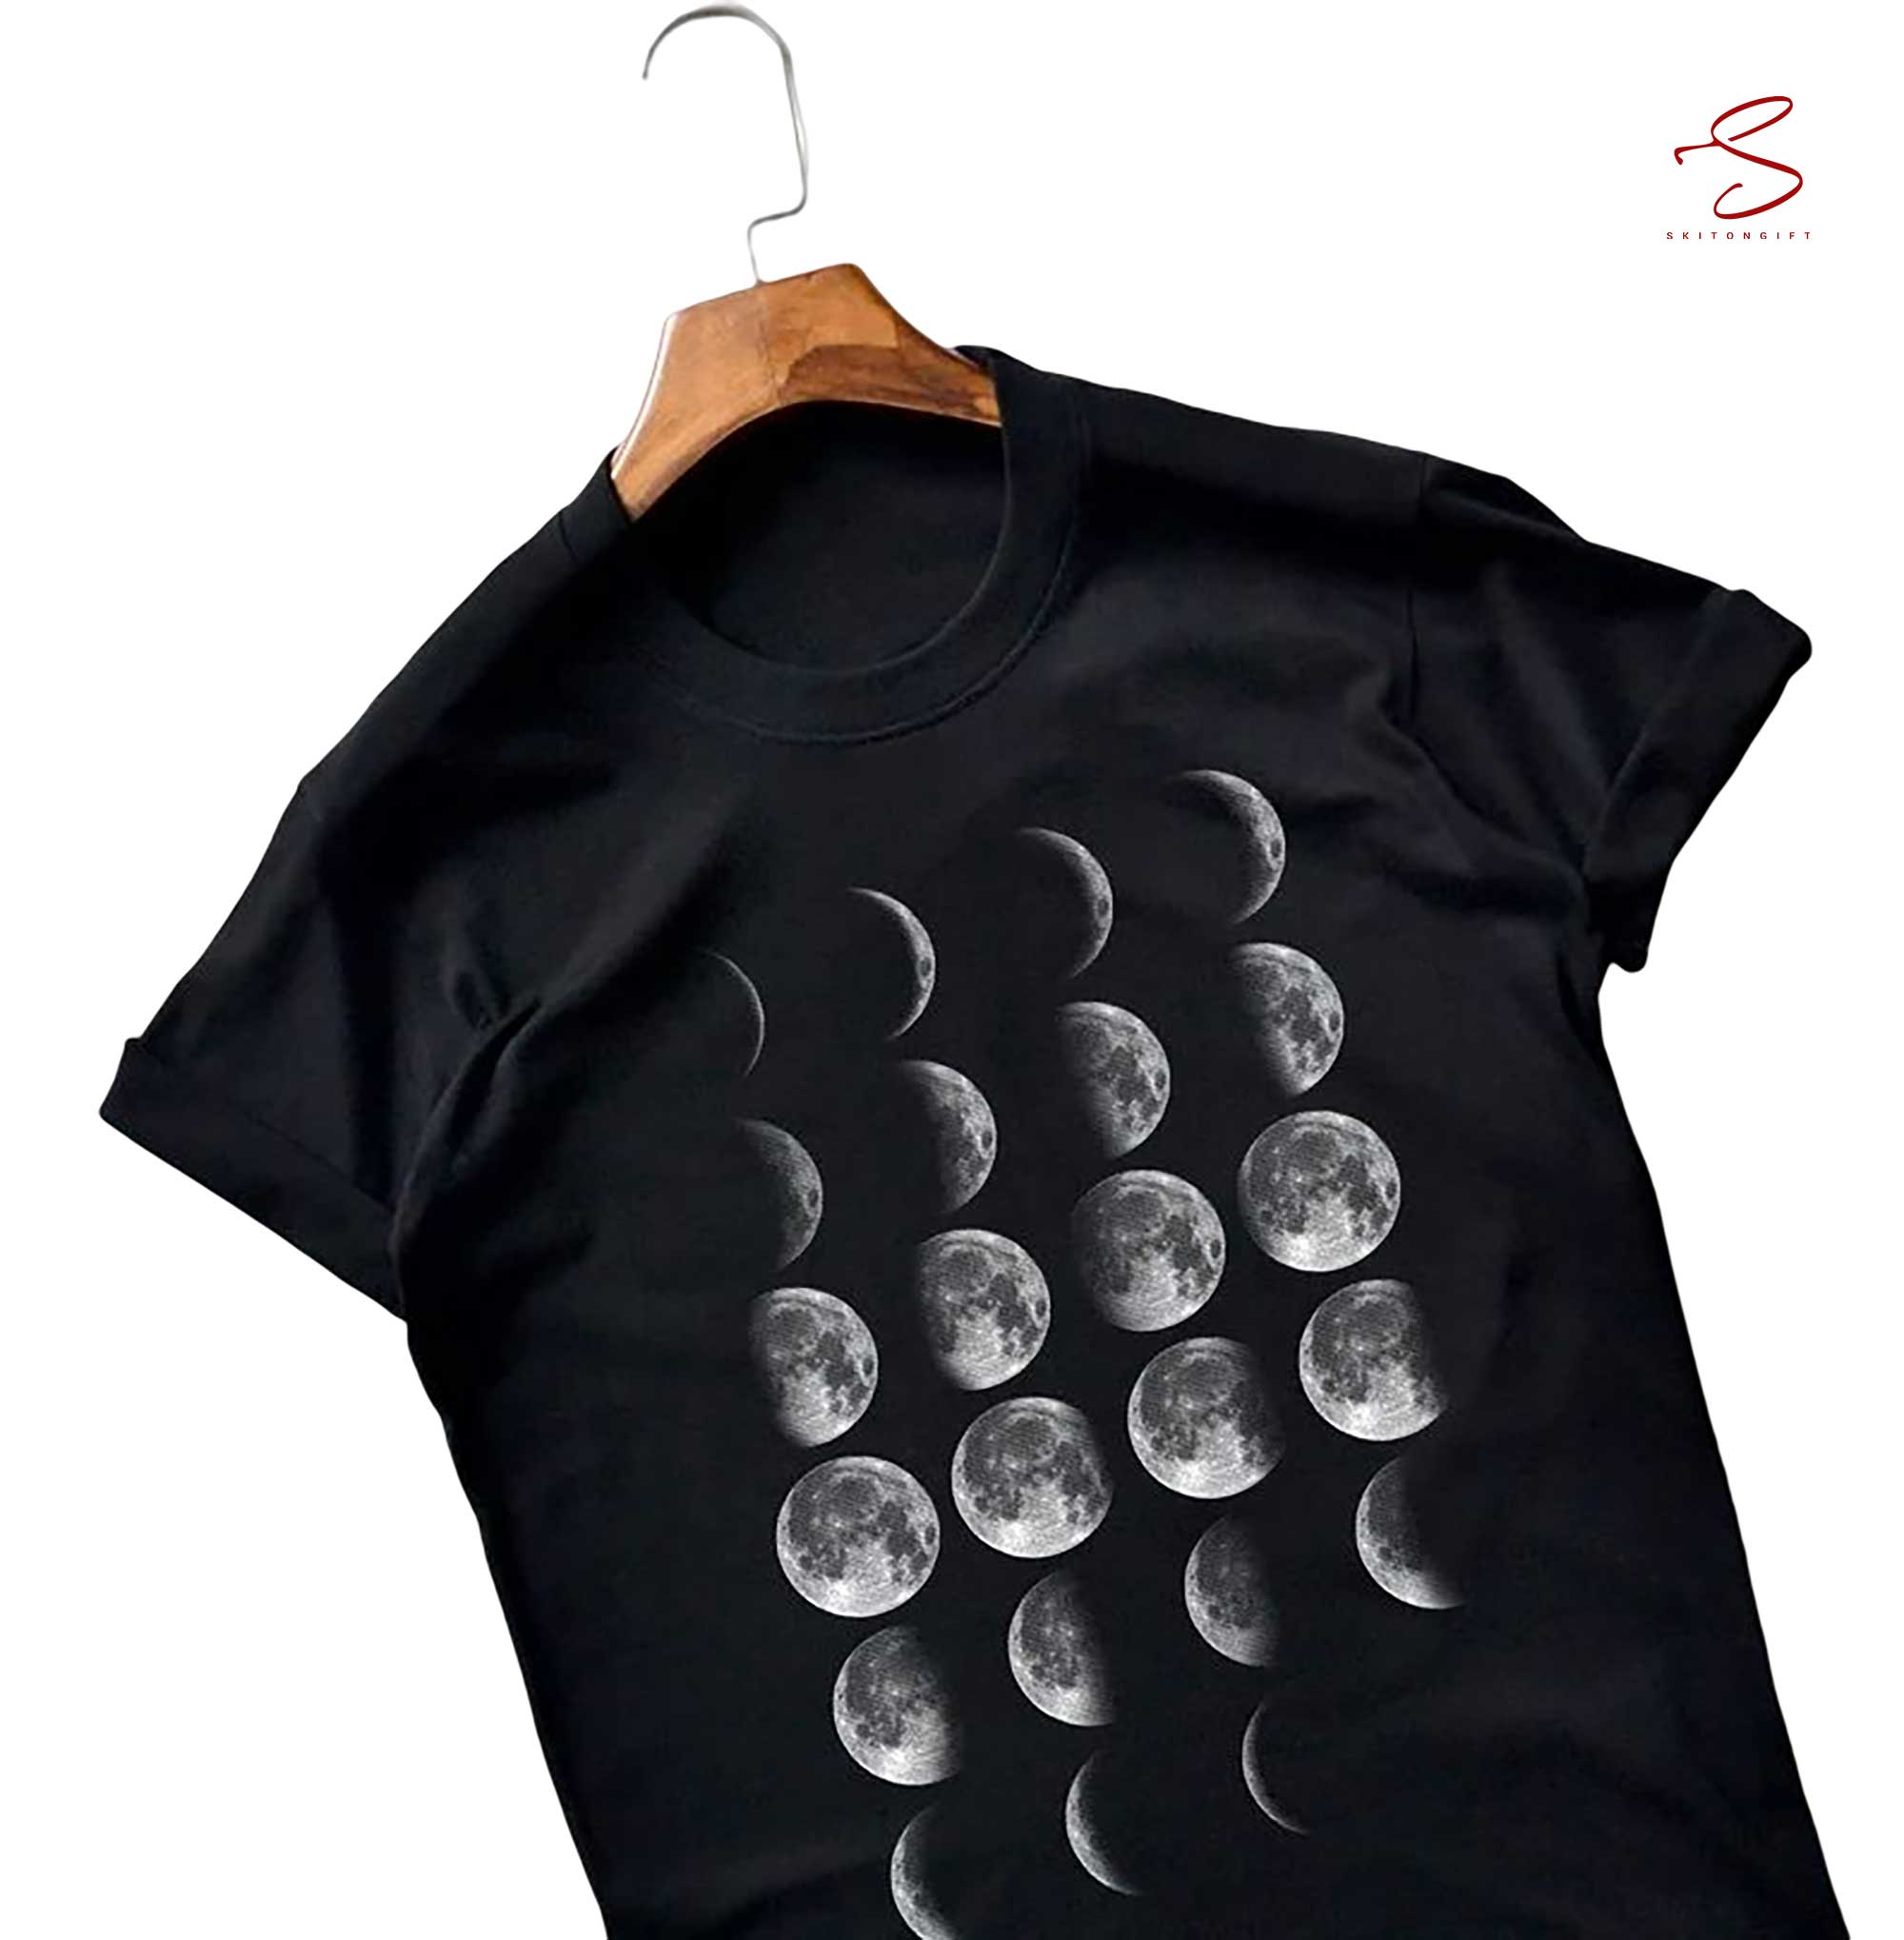 Skitongift Moon Phase T Shirts Moon T Shirt Full Moon Top Funny Shirts Long Sleeve Tee Hoody Hoodie